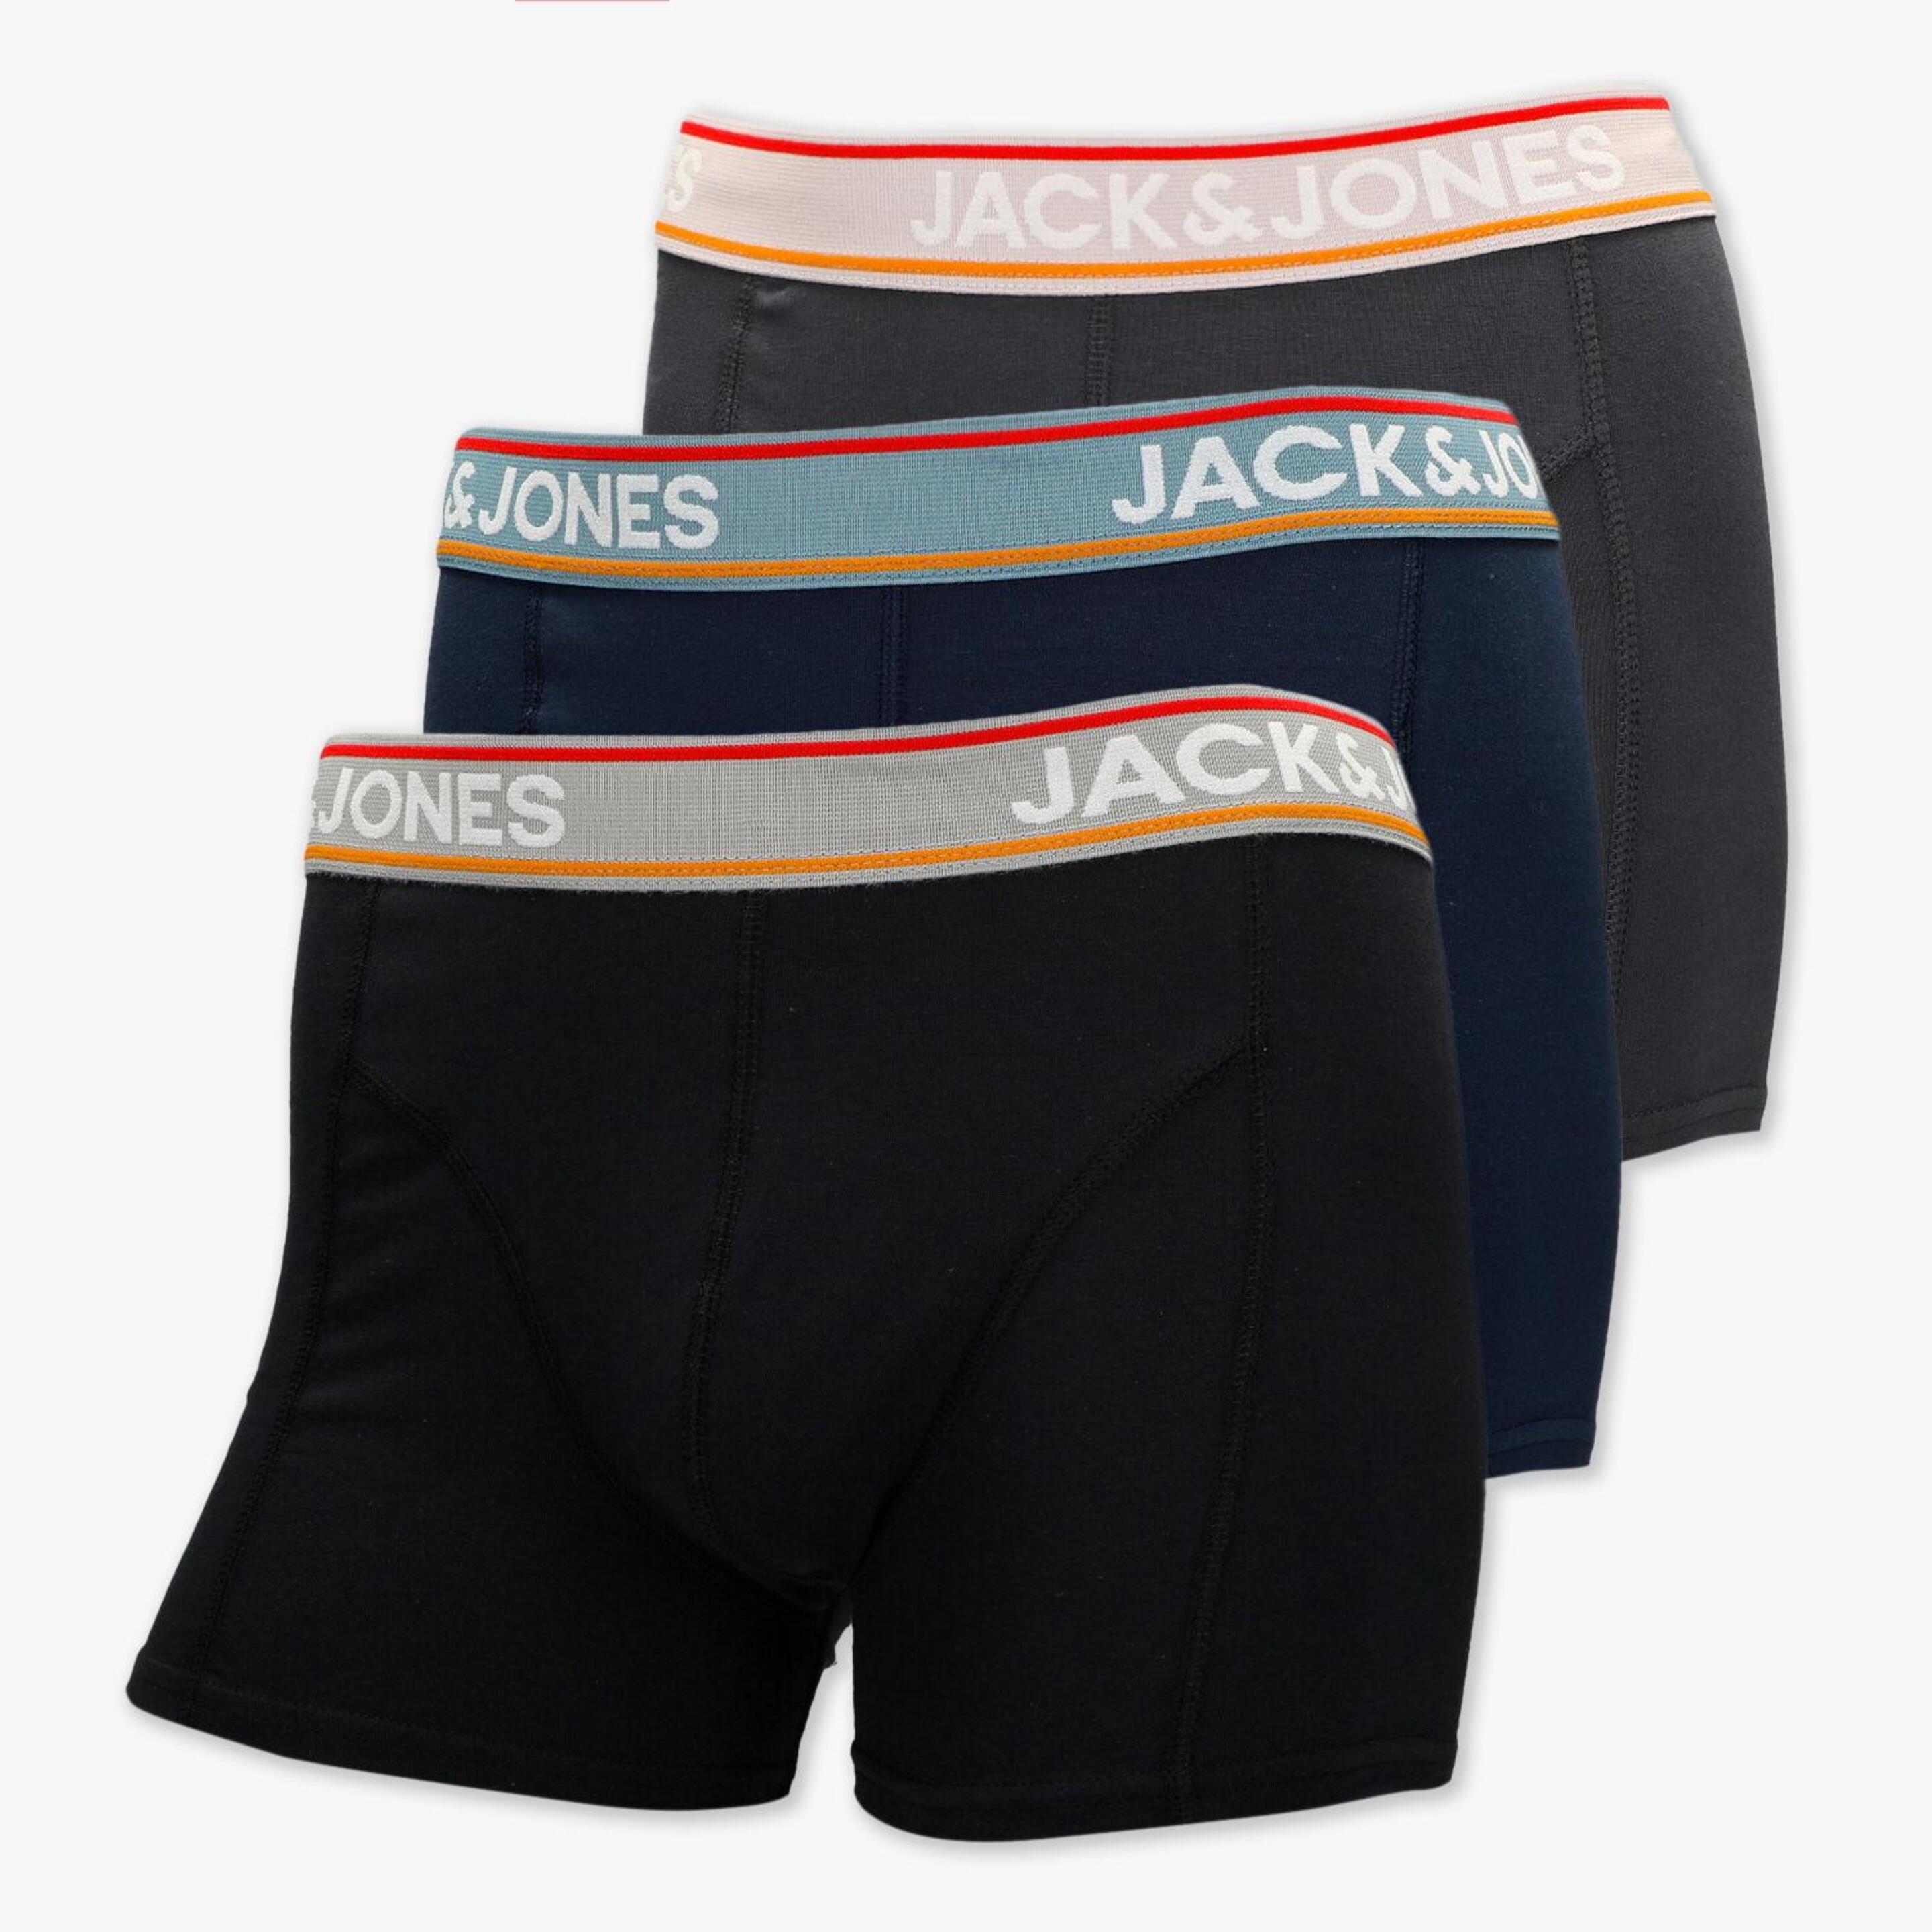 Jack & Jones Jackylo - gris - Pack 3 Boxers Homem